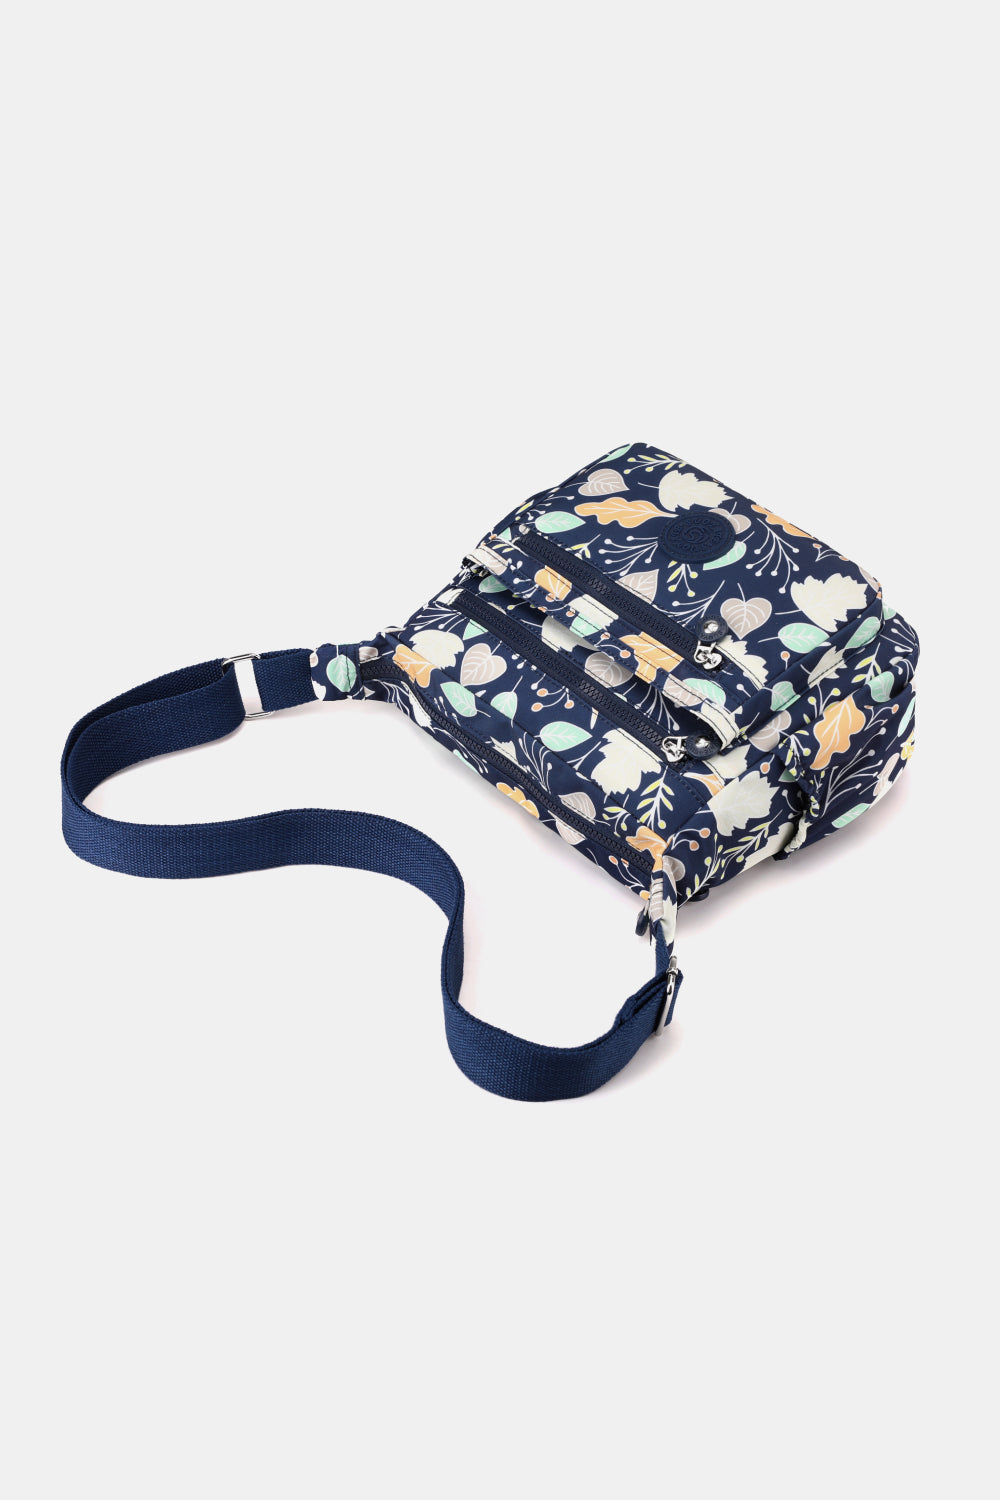 PREORDER- Printed Nylon Shoulder Bag